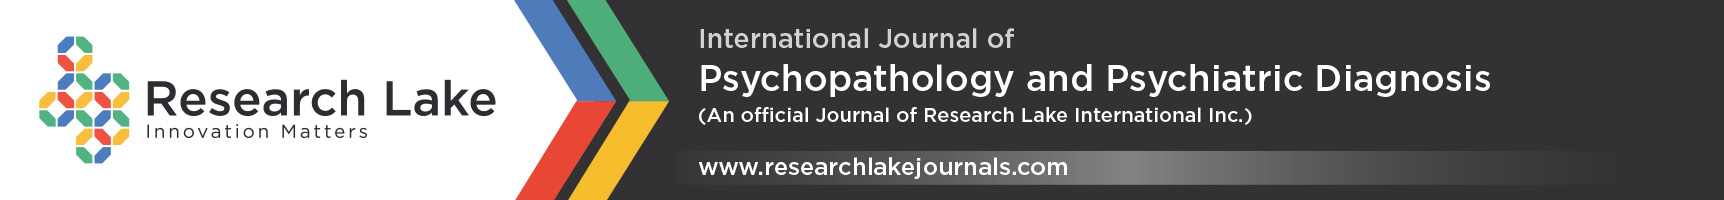 International Journal of Psychopathology and Psychiatric Diagnosis